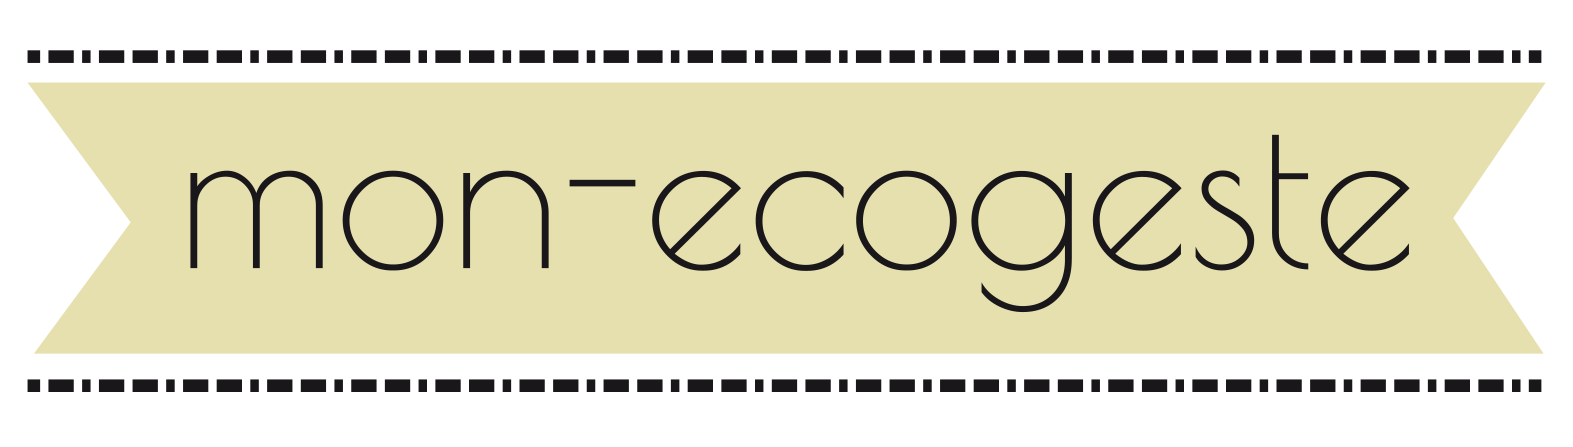 monecogeste-logo-ecommerce-ecologie-hausdefrance